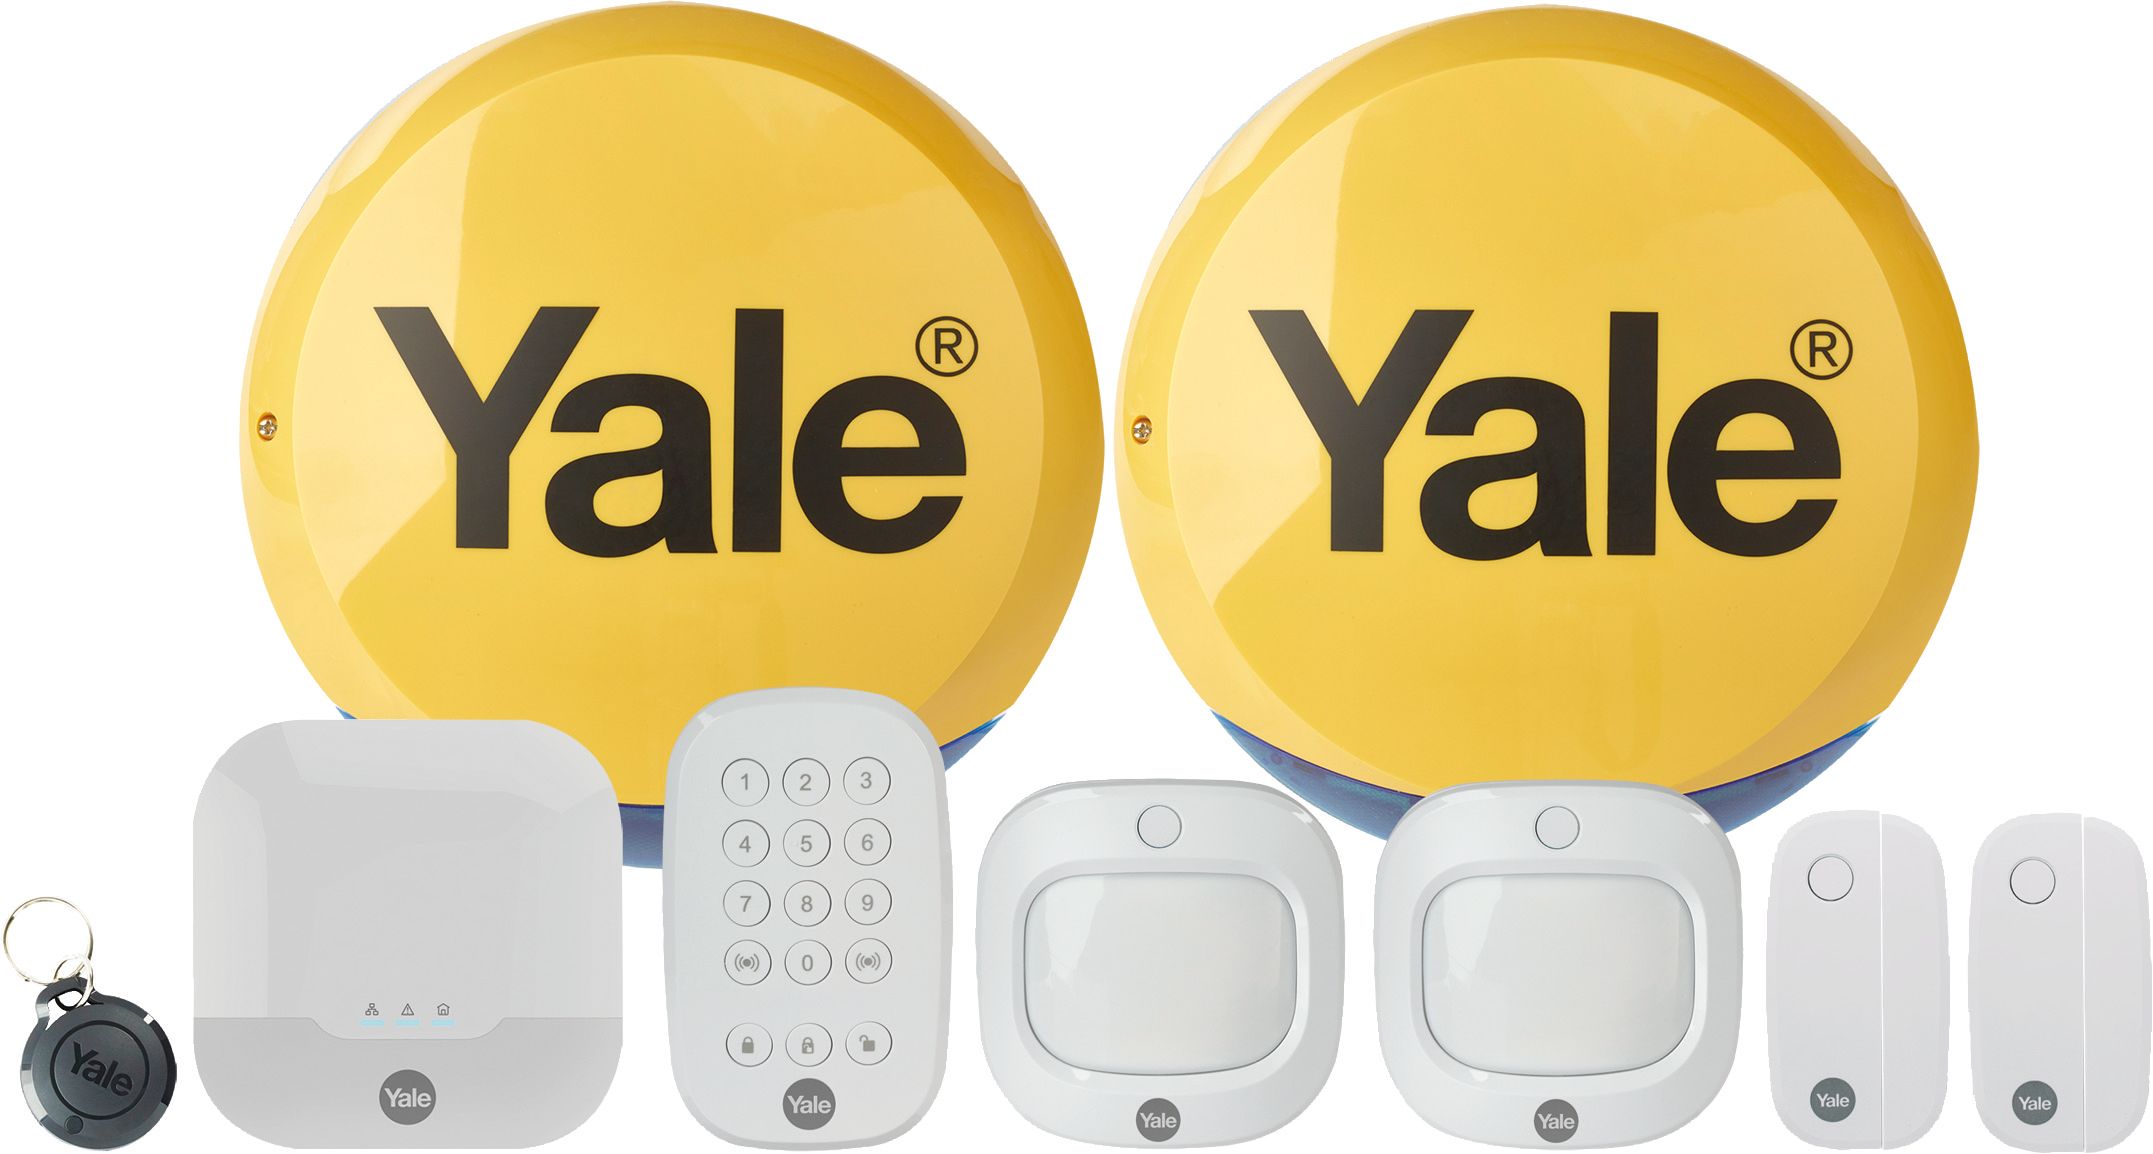 Yale IA-330 Sync Smart Home Security Alarm - Family Kit Plus